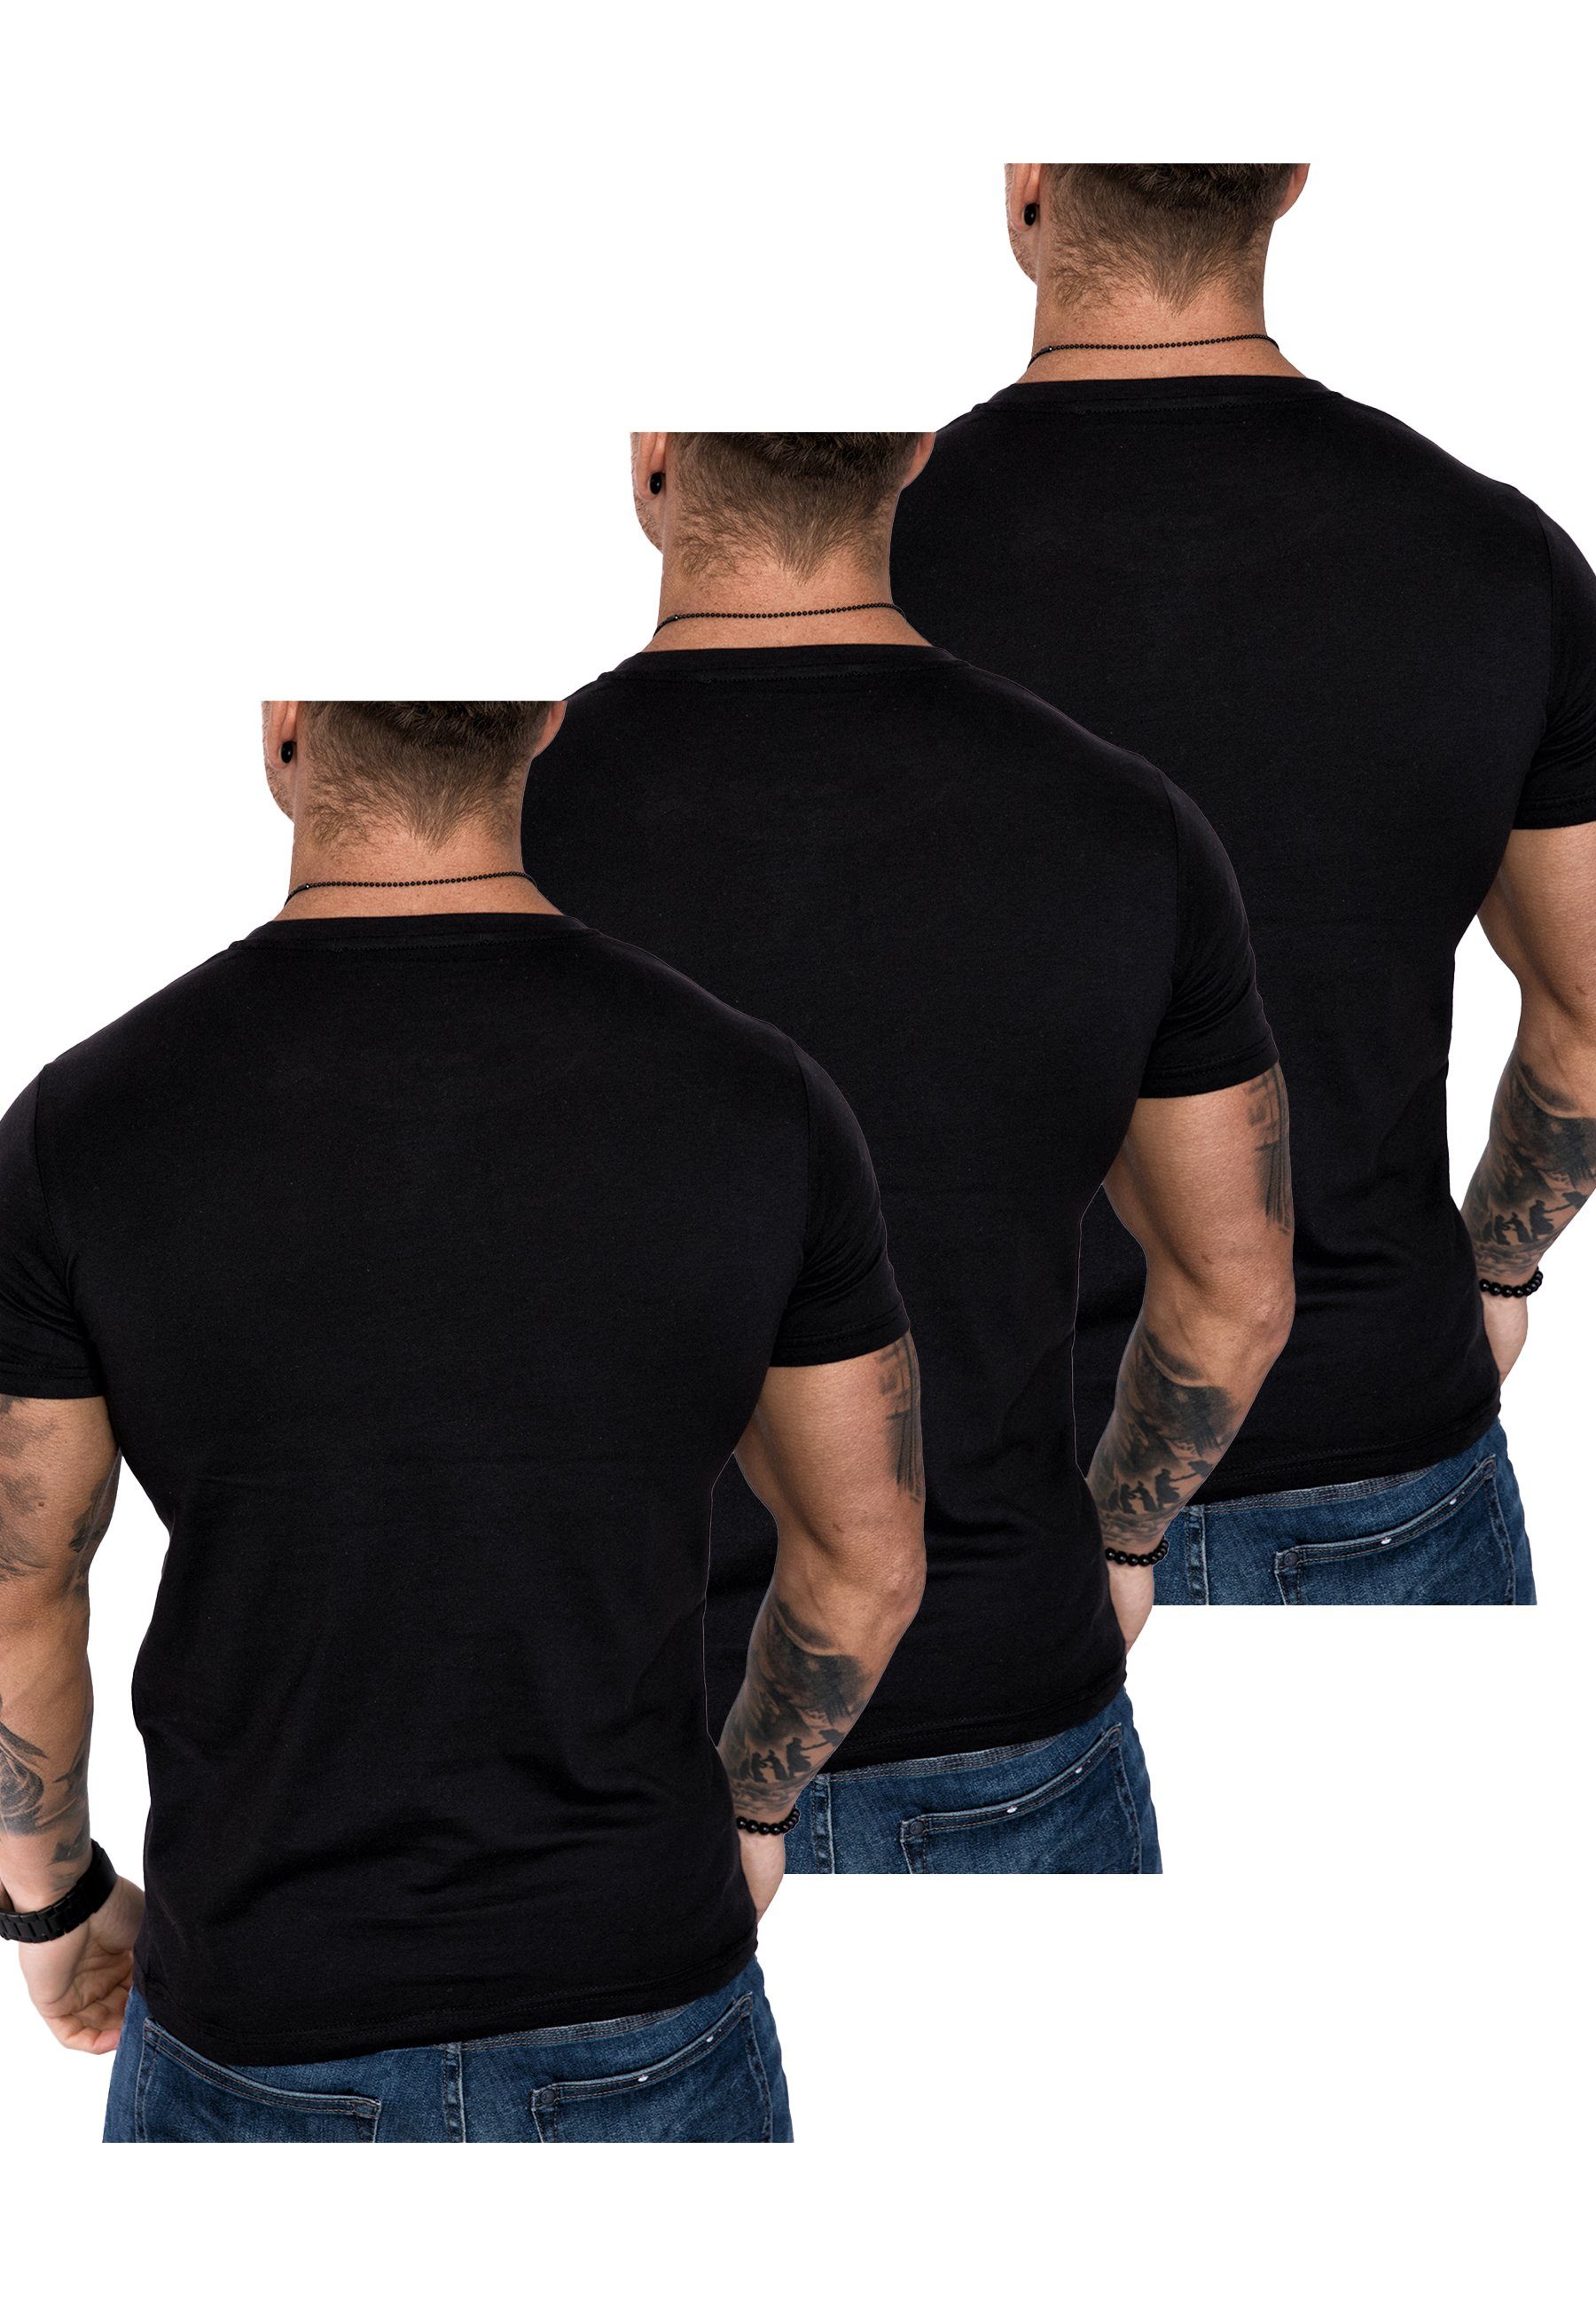 3er-Pack mit T-Shirts (3er-Pack) Rundhalsausschnitt LANCASTER Herren Amaci&Sons T-Shirt Oversize Schwarz) Basic T-Shirt 3. (3x